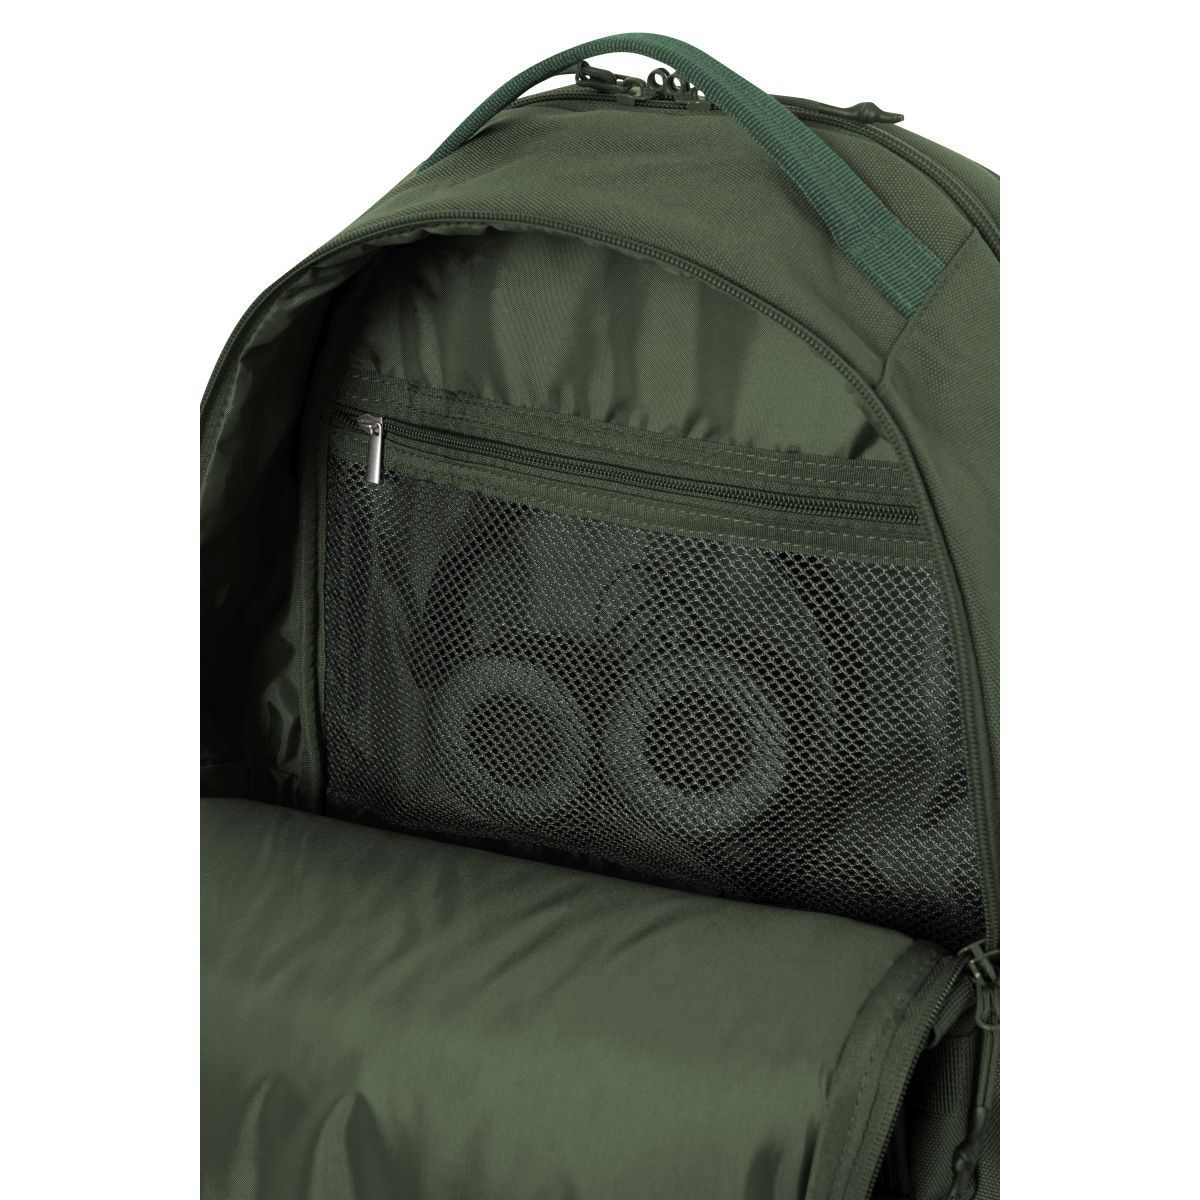 Plecak Patio cool pack ARMY (C39255)